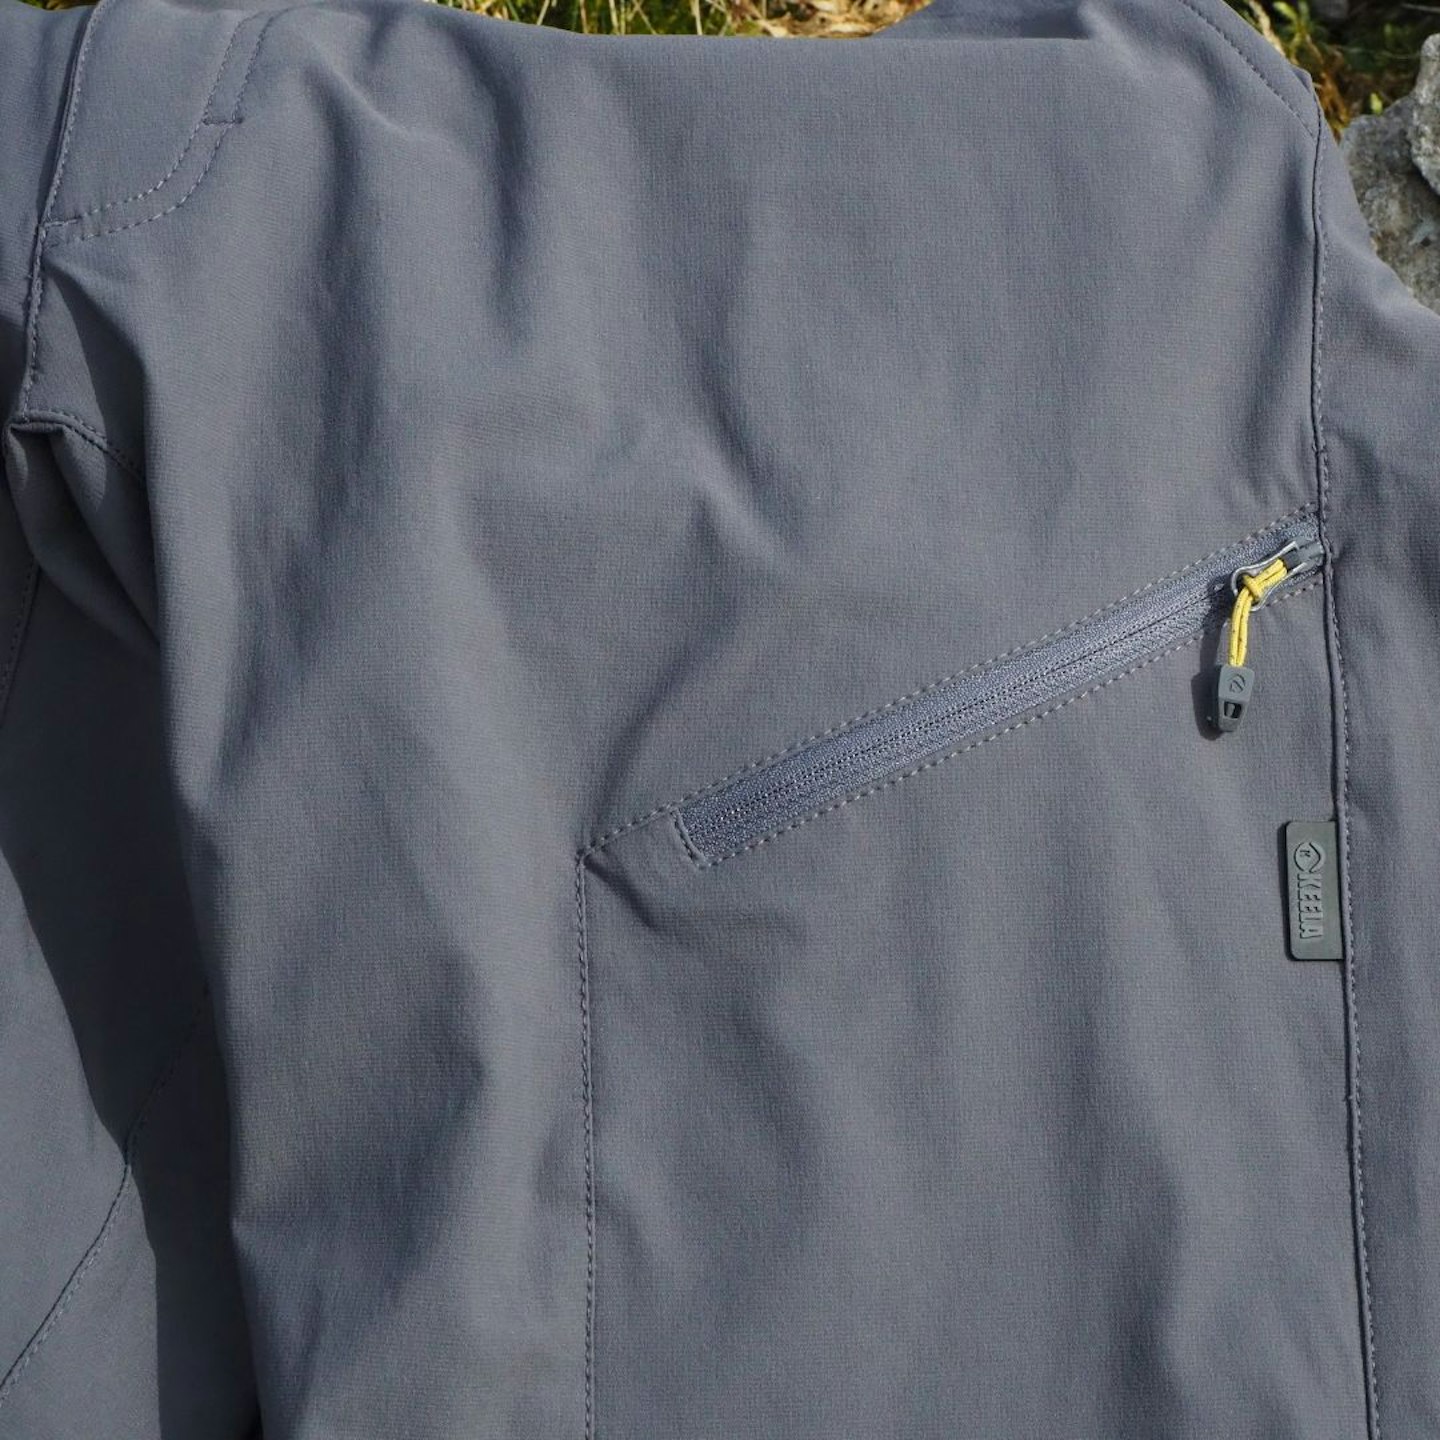 Keela Bidean Shorts zipped pocket